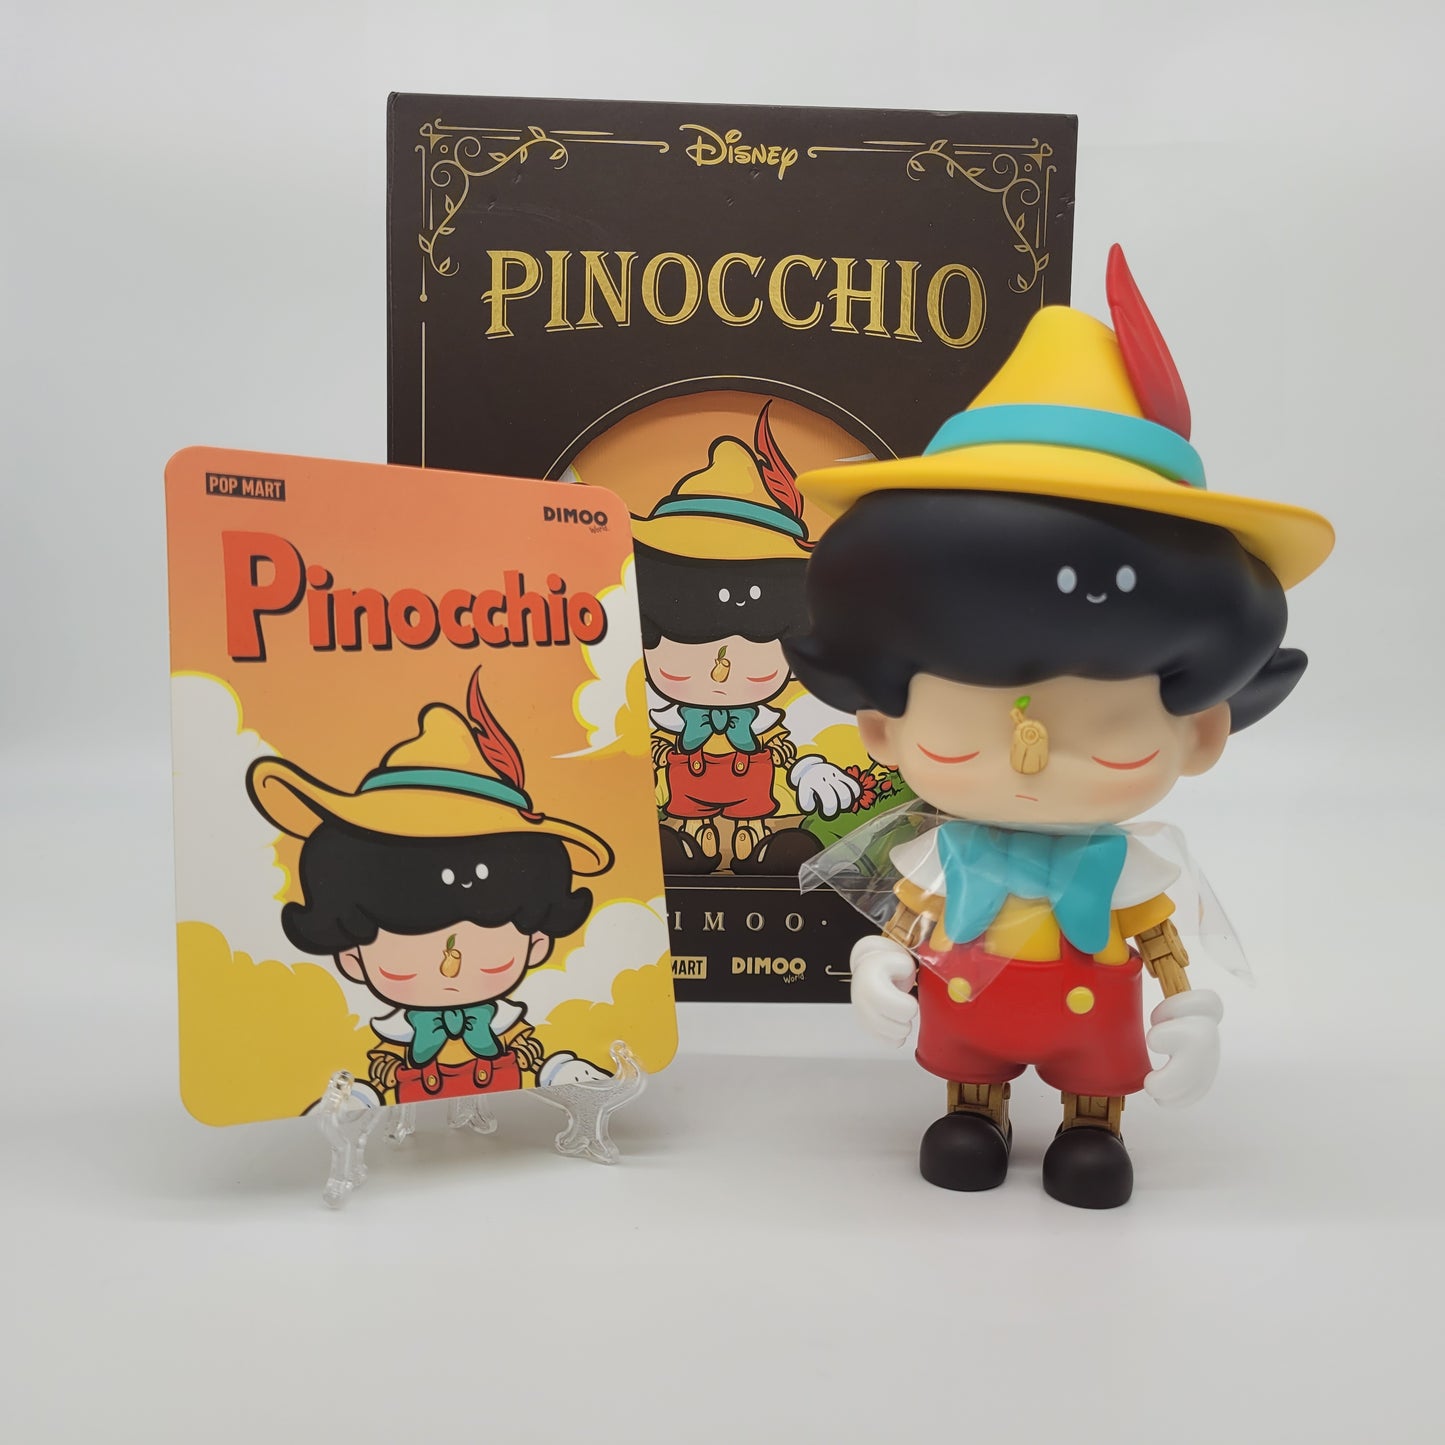 ETTV POPMART Dimoo Pinocchio Disney 200% Figure Collectible Limited Edition